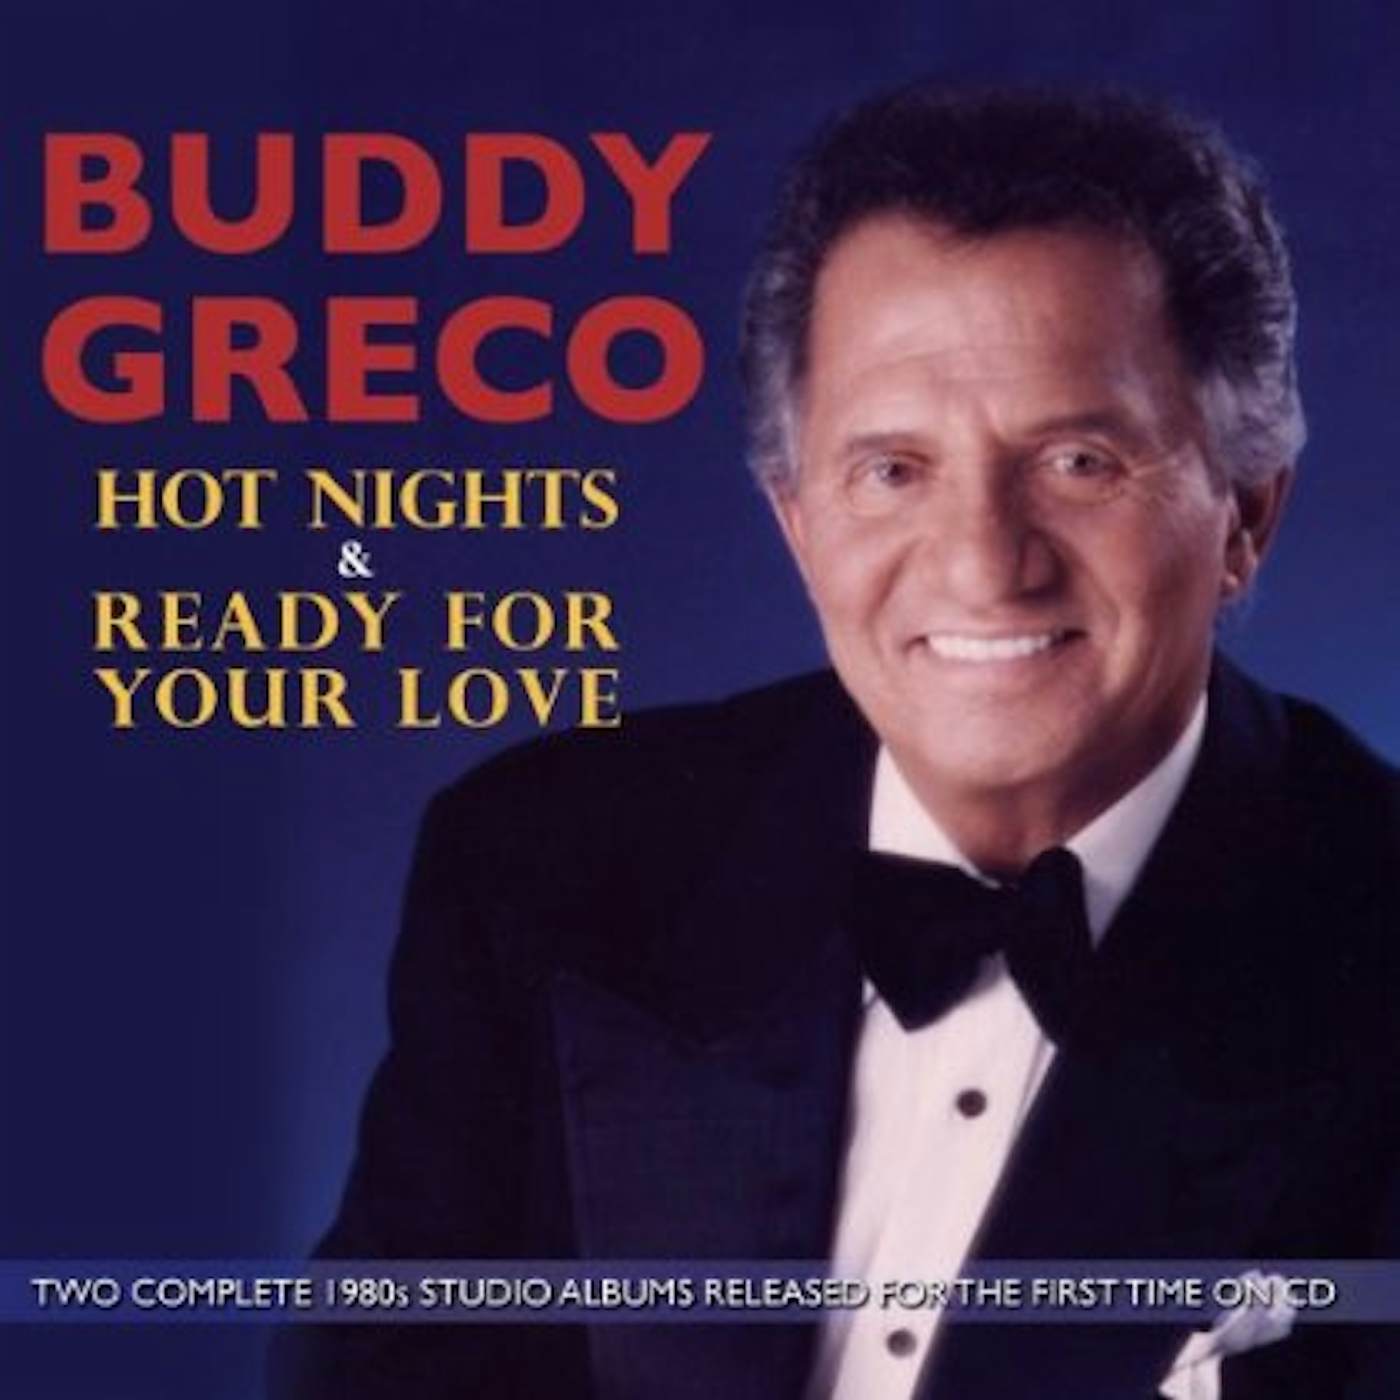 Buddy Greco HOT NIGHTS & READY TO LOVE CD